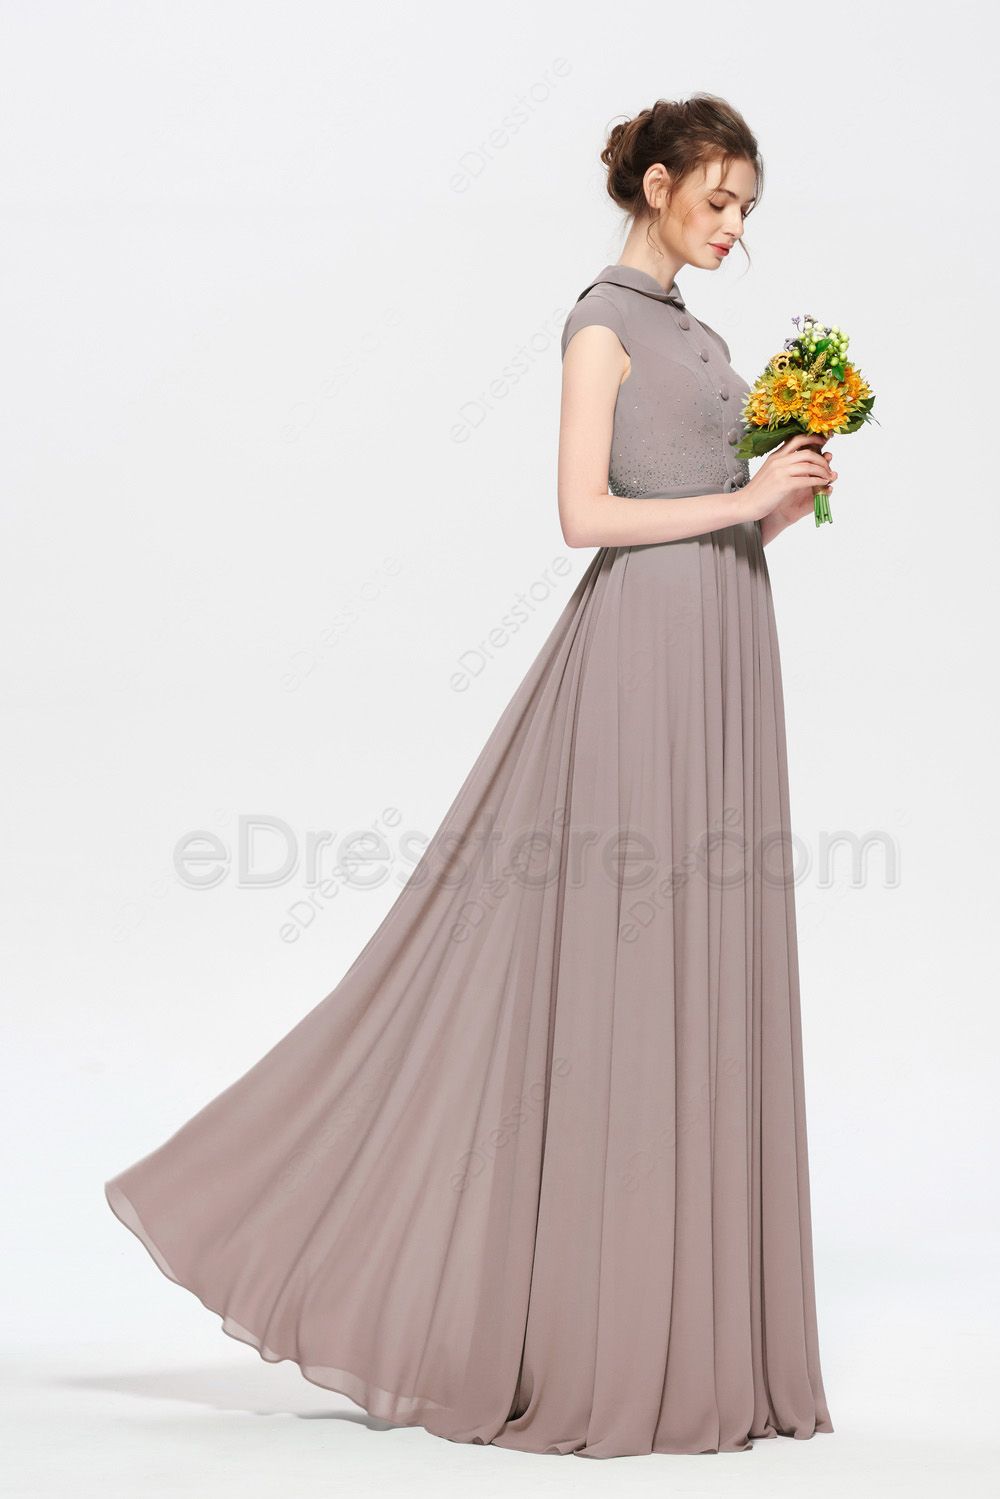 Modest Neutral Bridesmaid Dresses Jewel Neckline | eDresstore